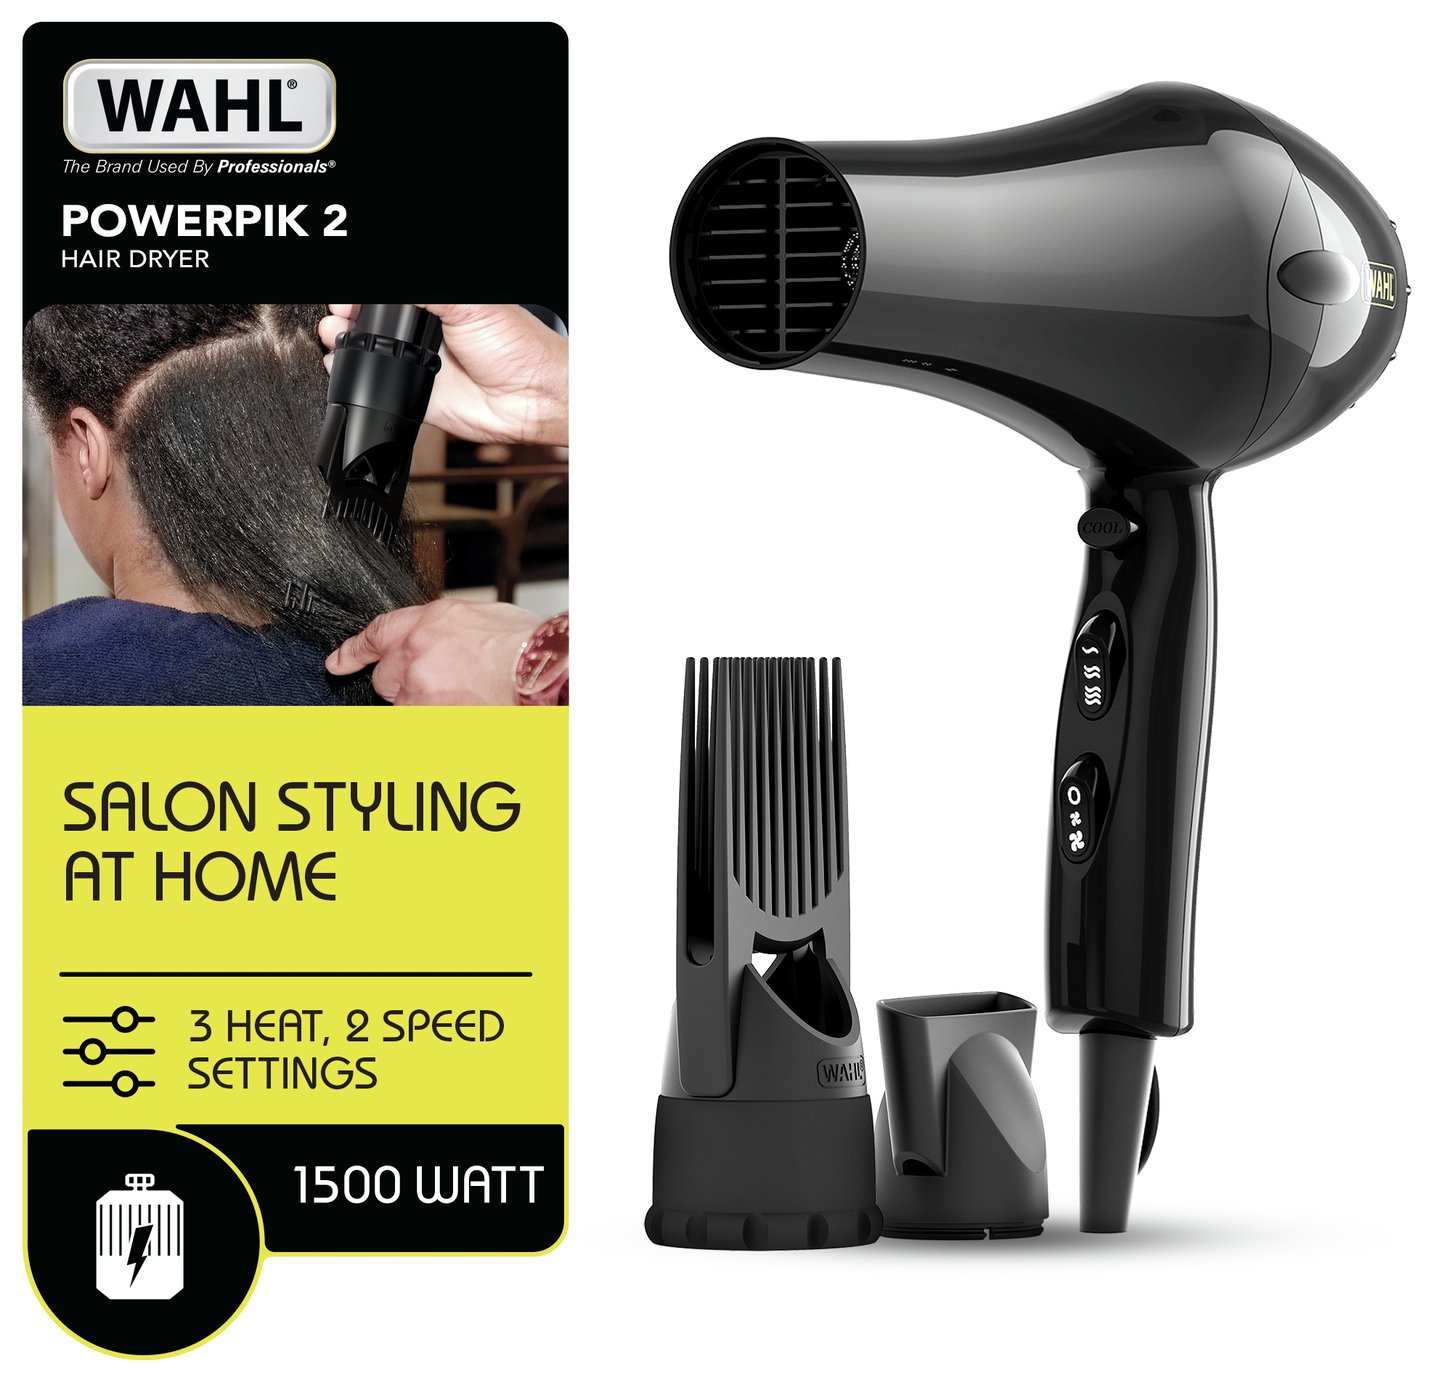 Wahl PowerPik 2 Hair Dryer review